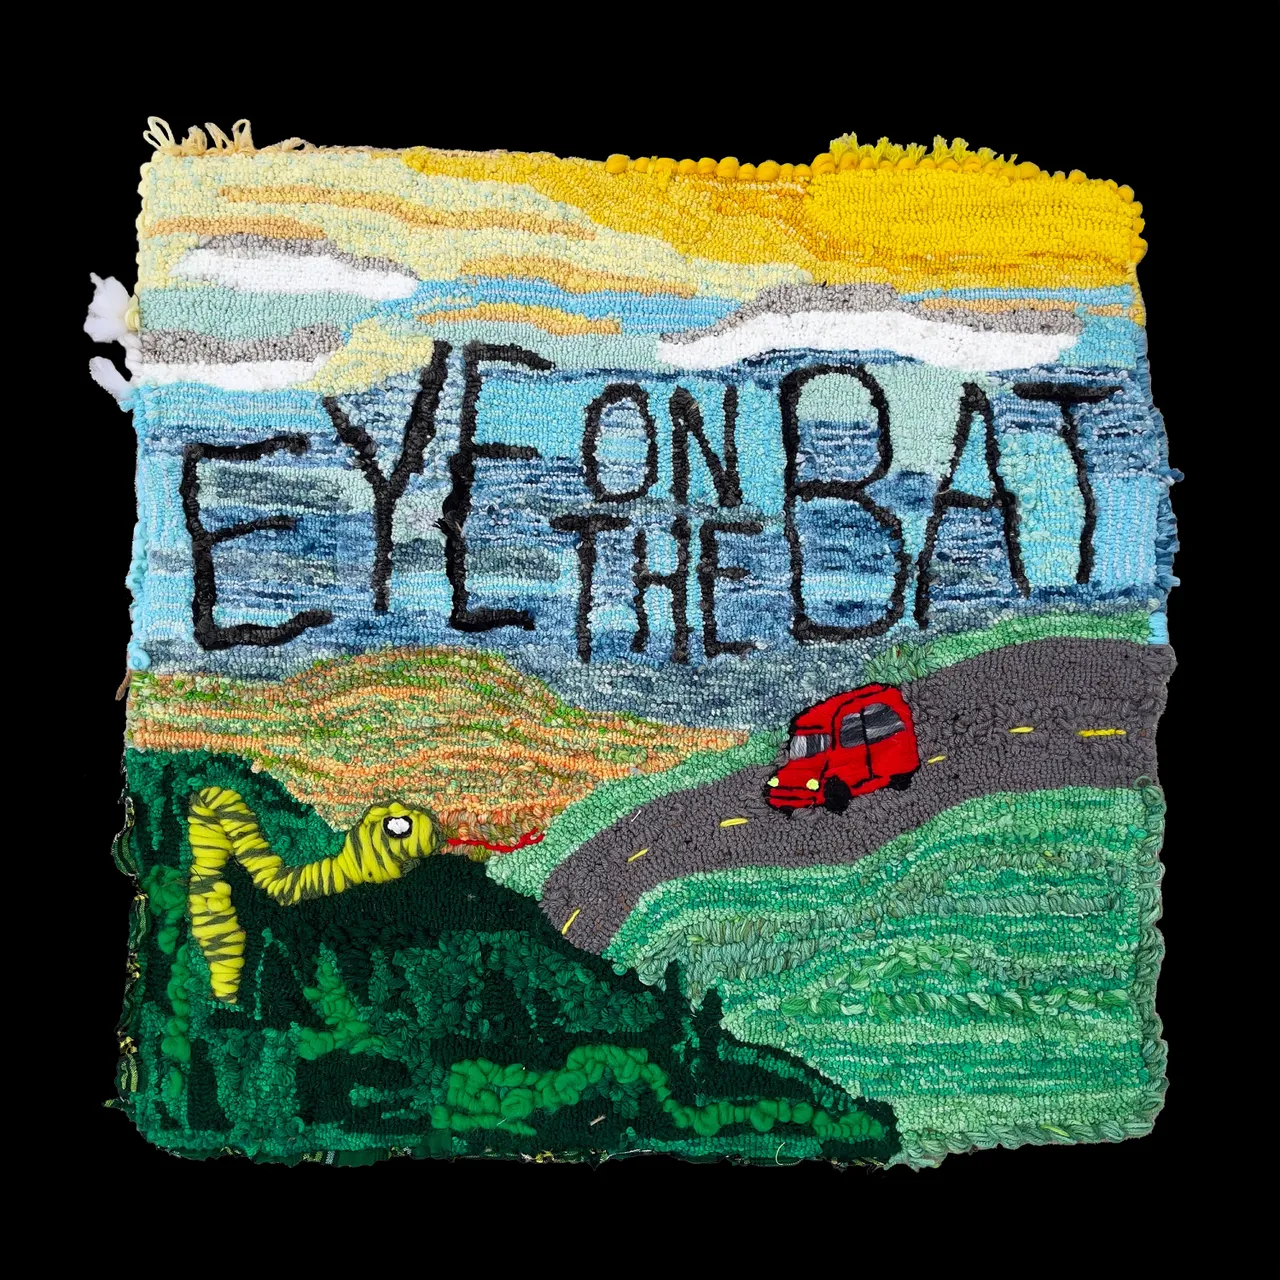 Palehound Eye On The Bat cover artwork